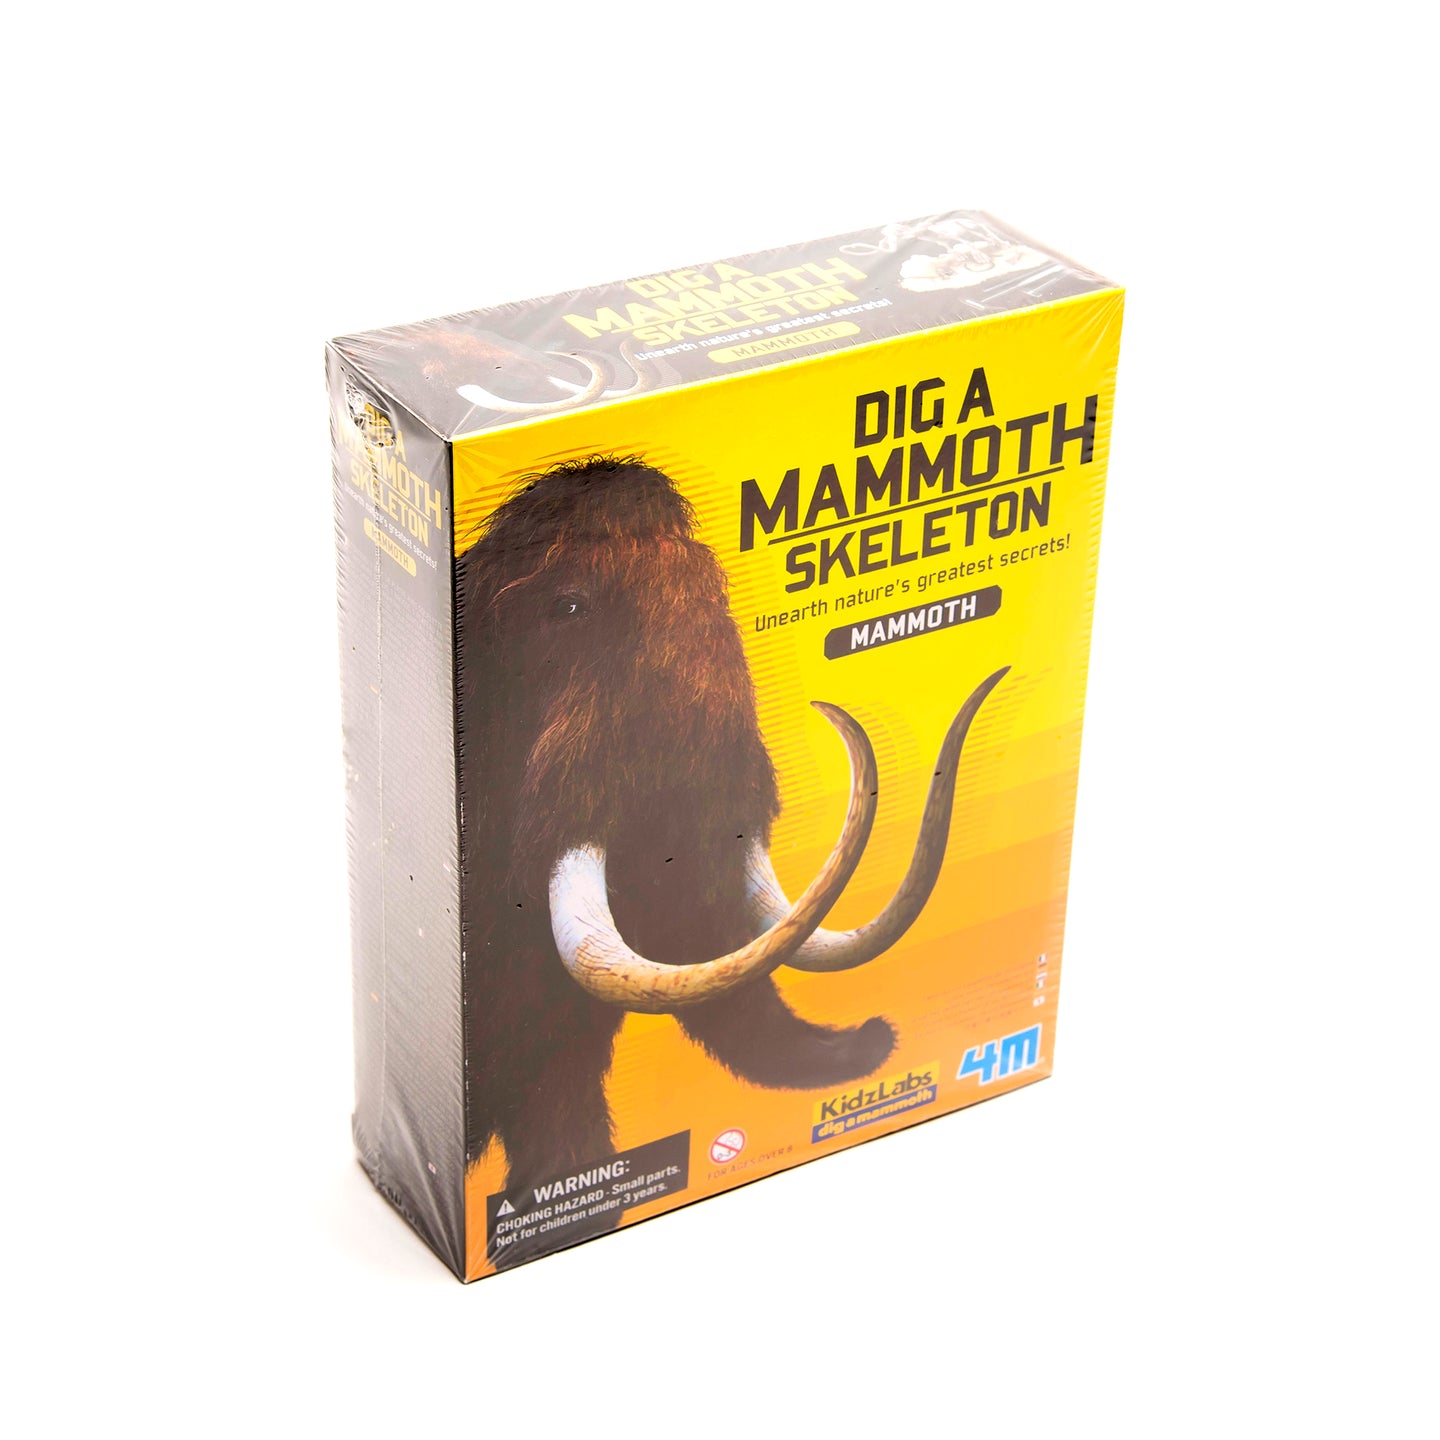 Dig a Mammoth